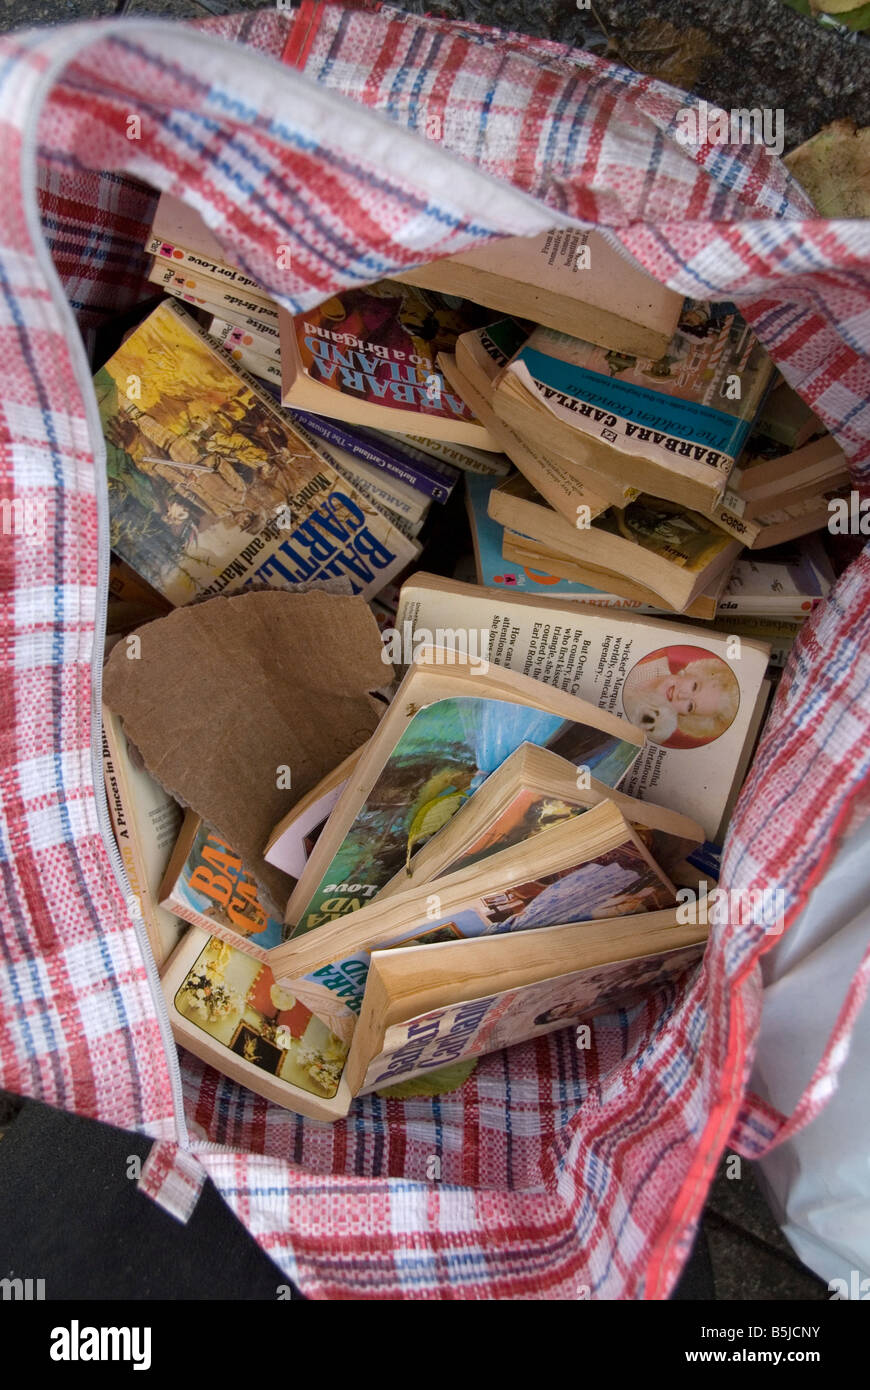 Broadway market. Bag full of Barbara Cartland novels thrown away as rubbish. Stock Photo